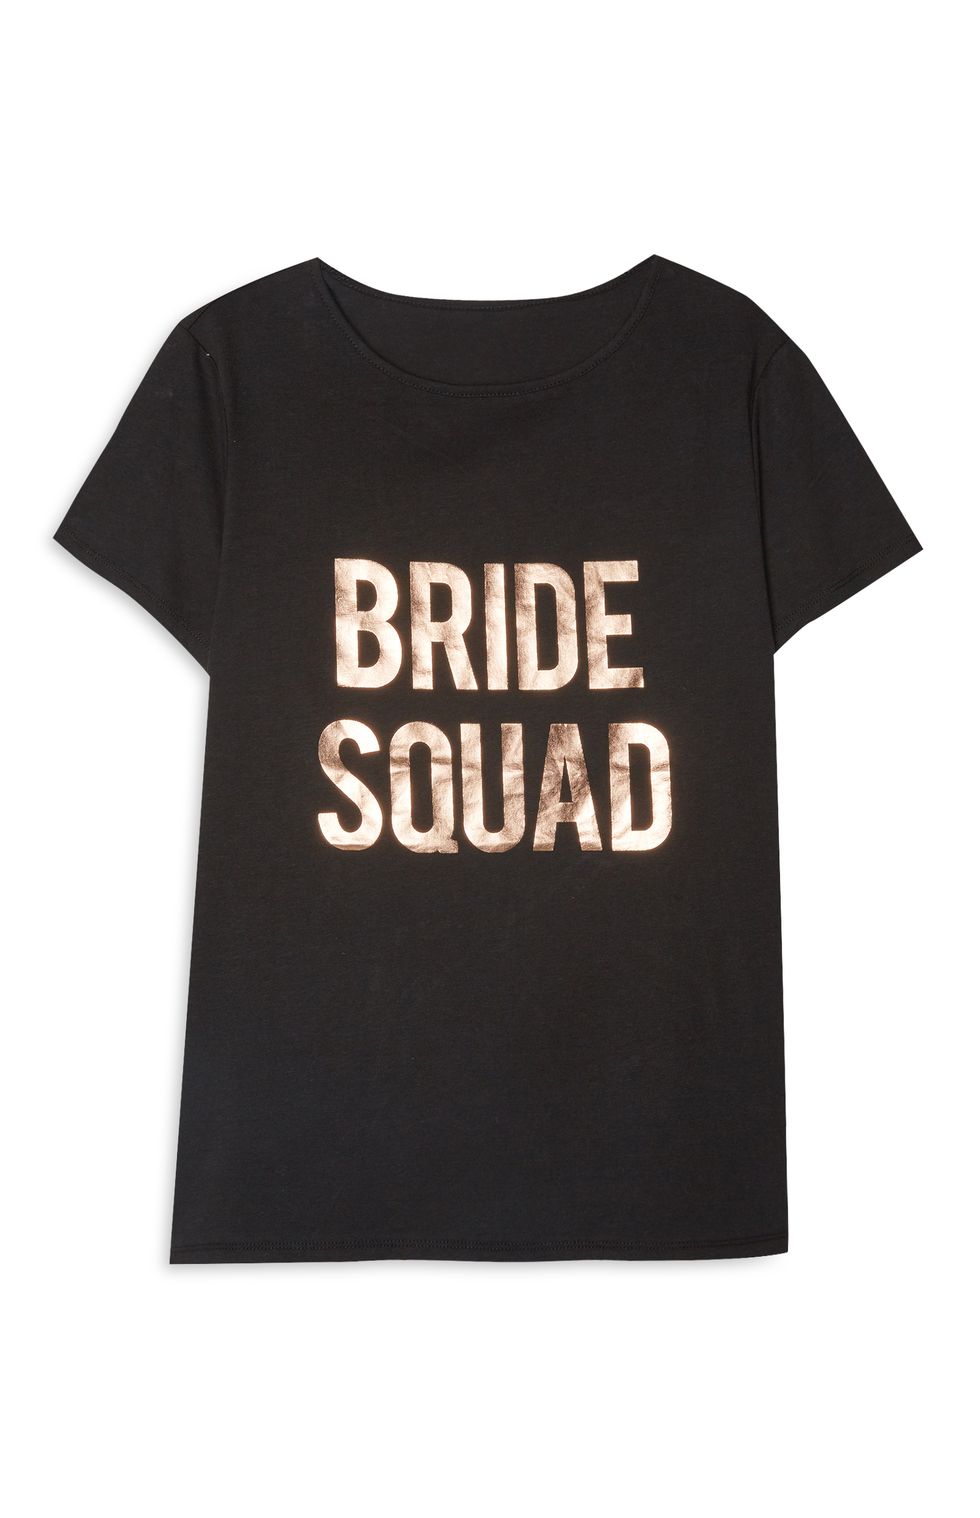 T-shirt Bride Squad - €5